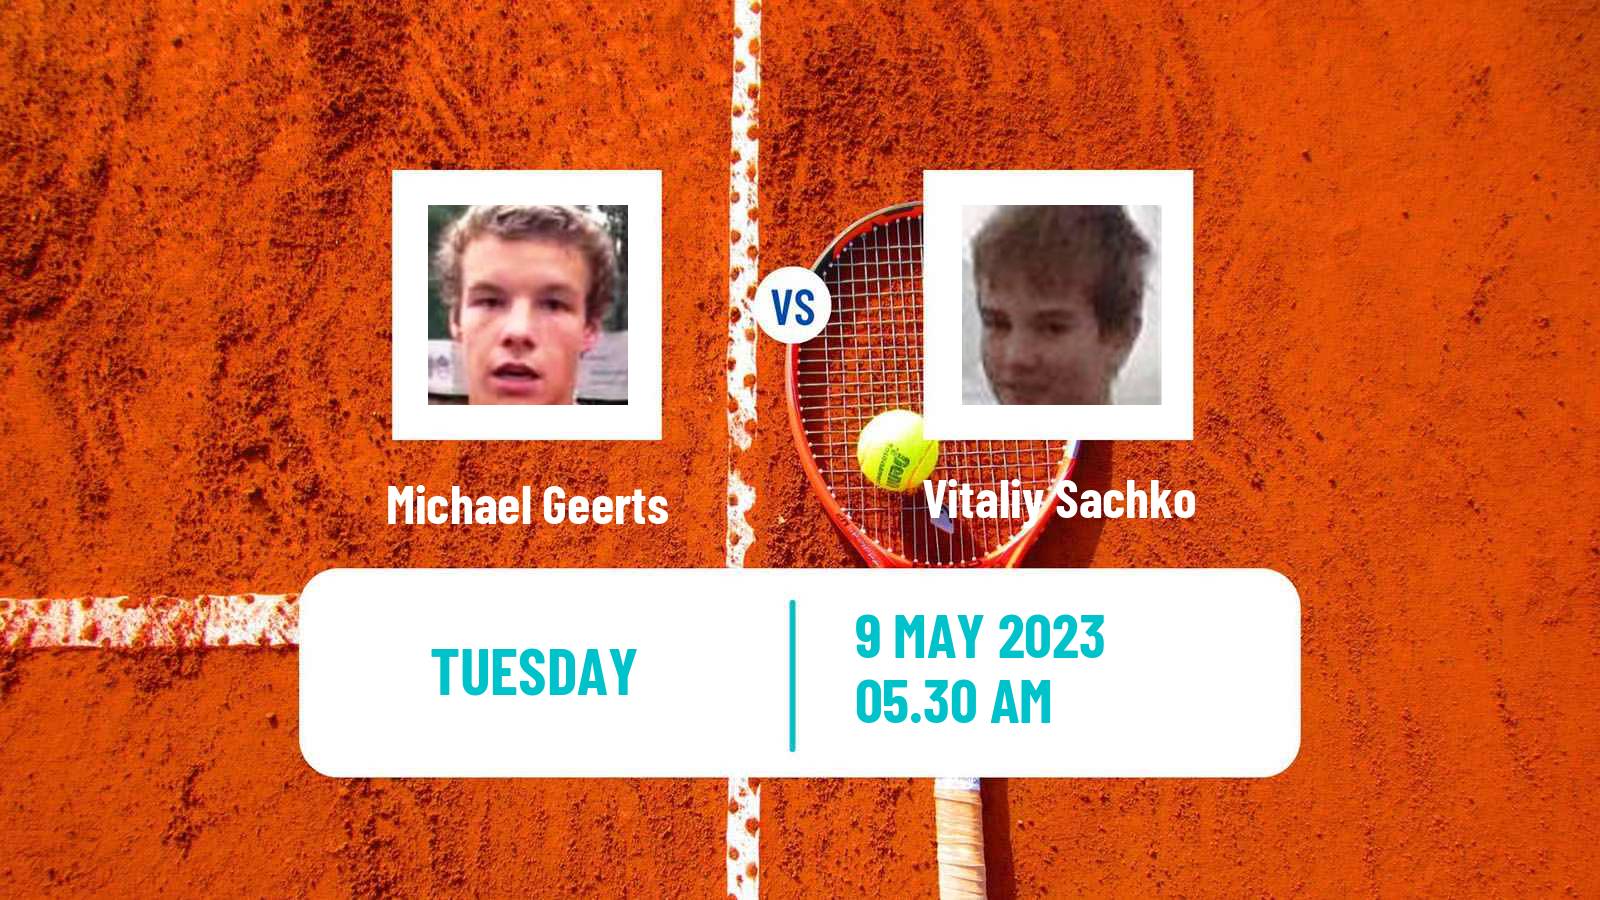 Tennis ATP Challenger Michael Geerts - Vitaliy Sachko